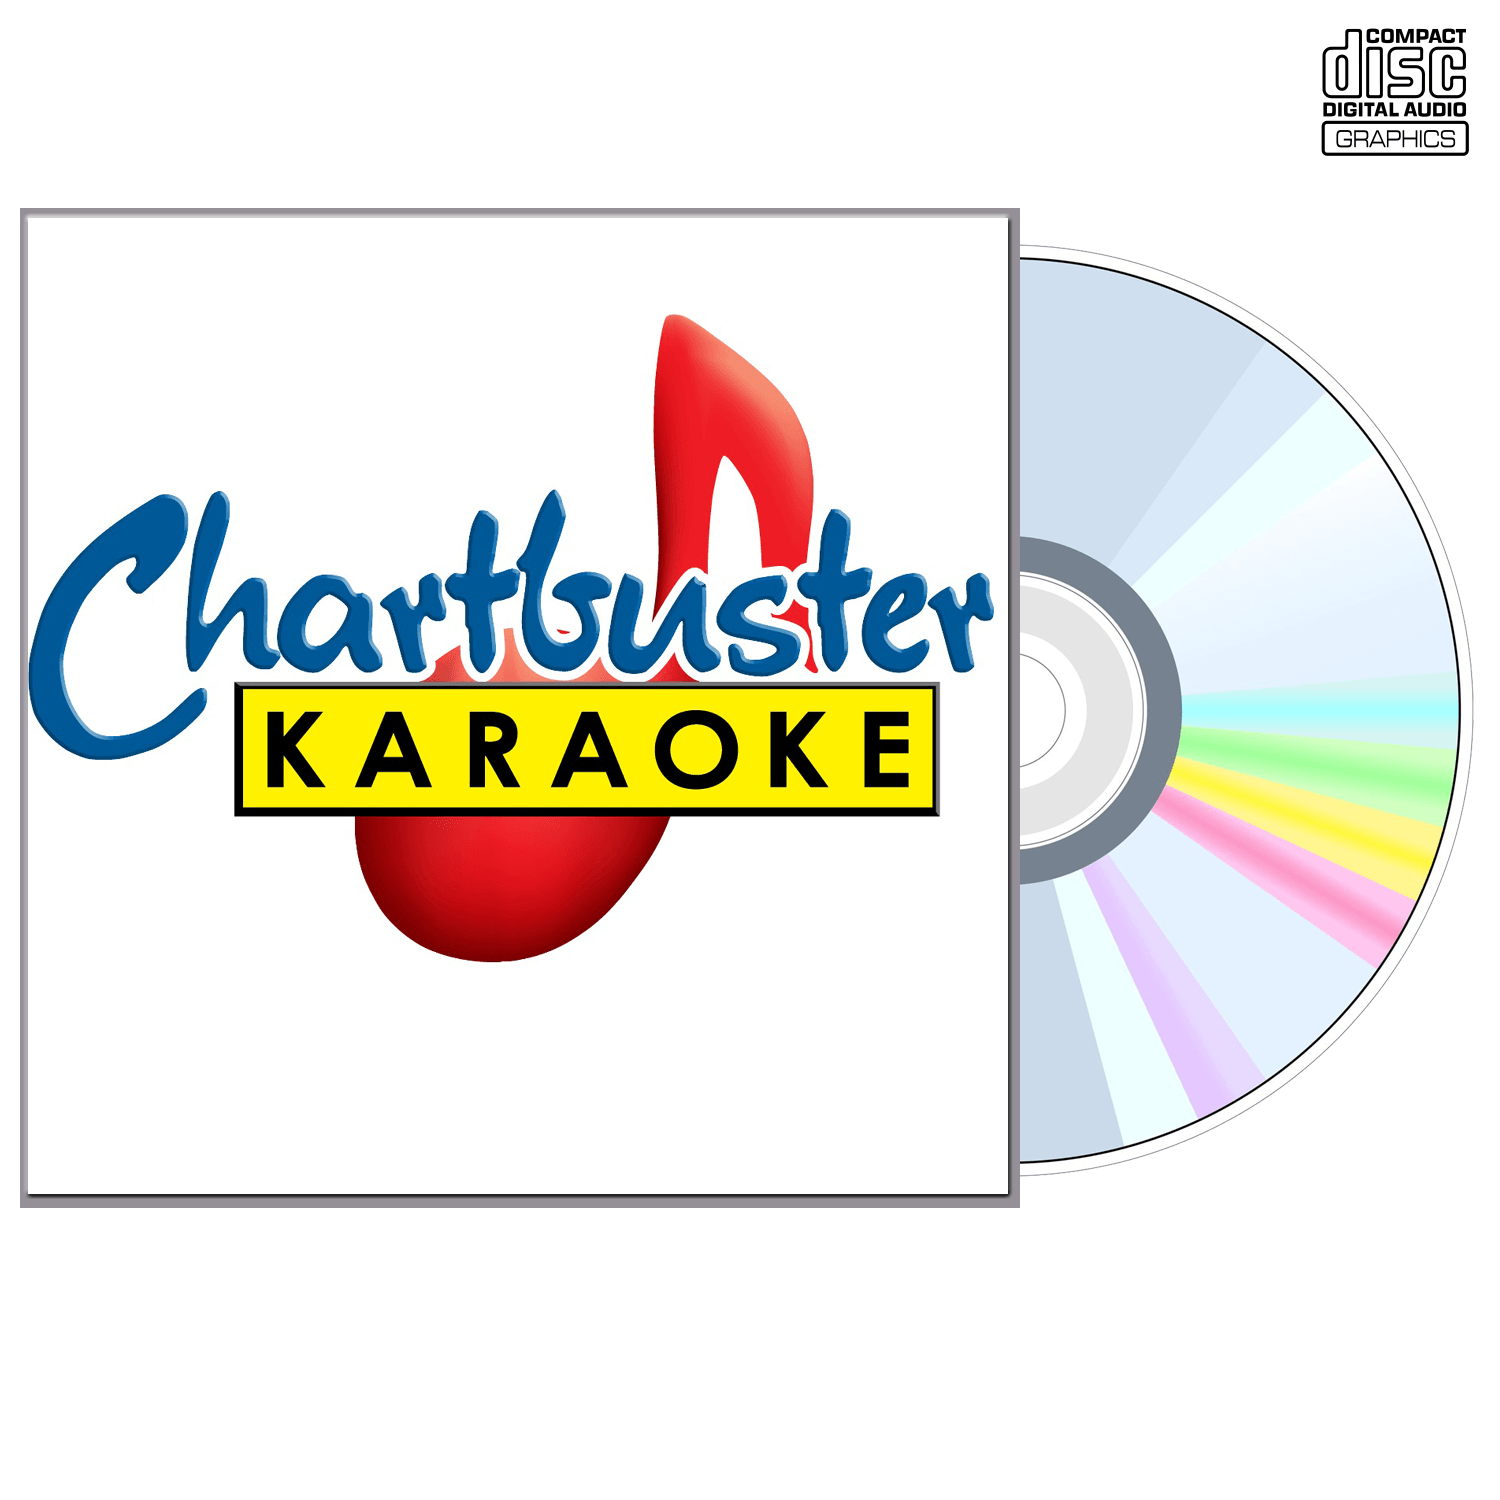 Sonny And Cher - CD+G - Chartbuster Karaoke - Karaoke Home Entertainment